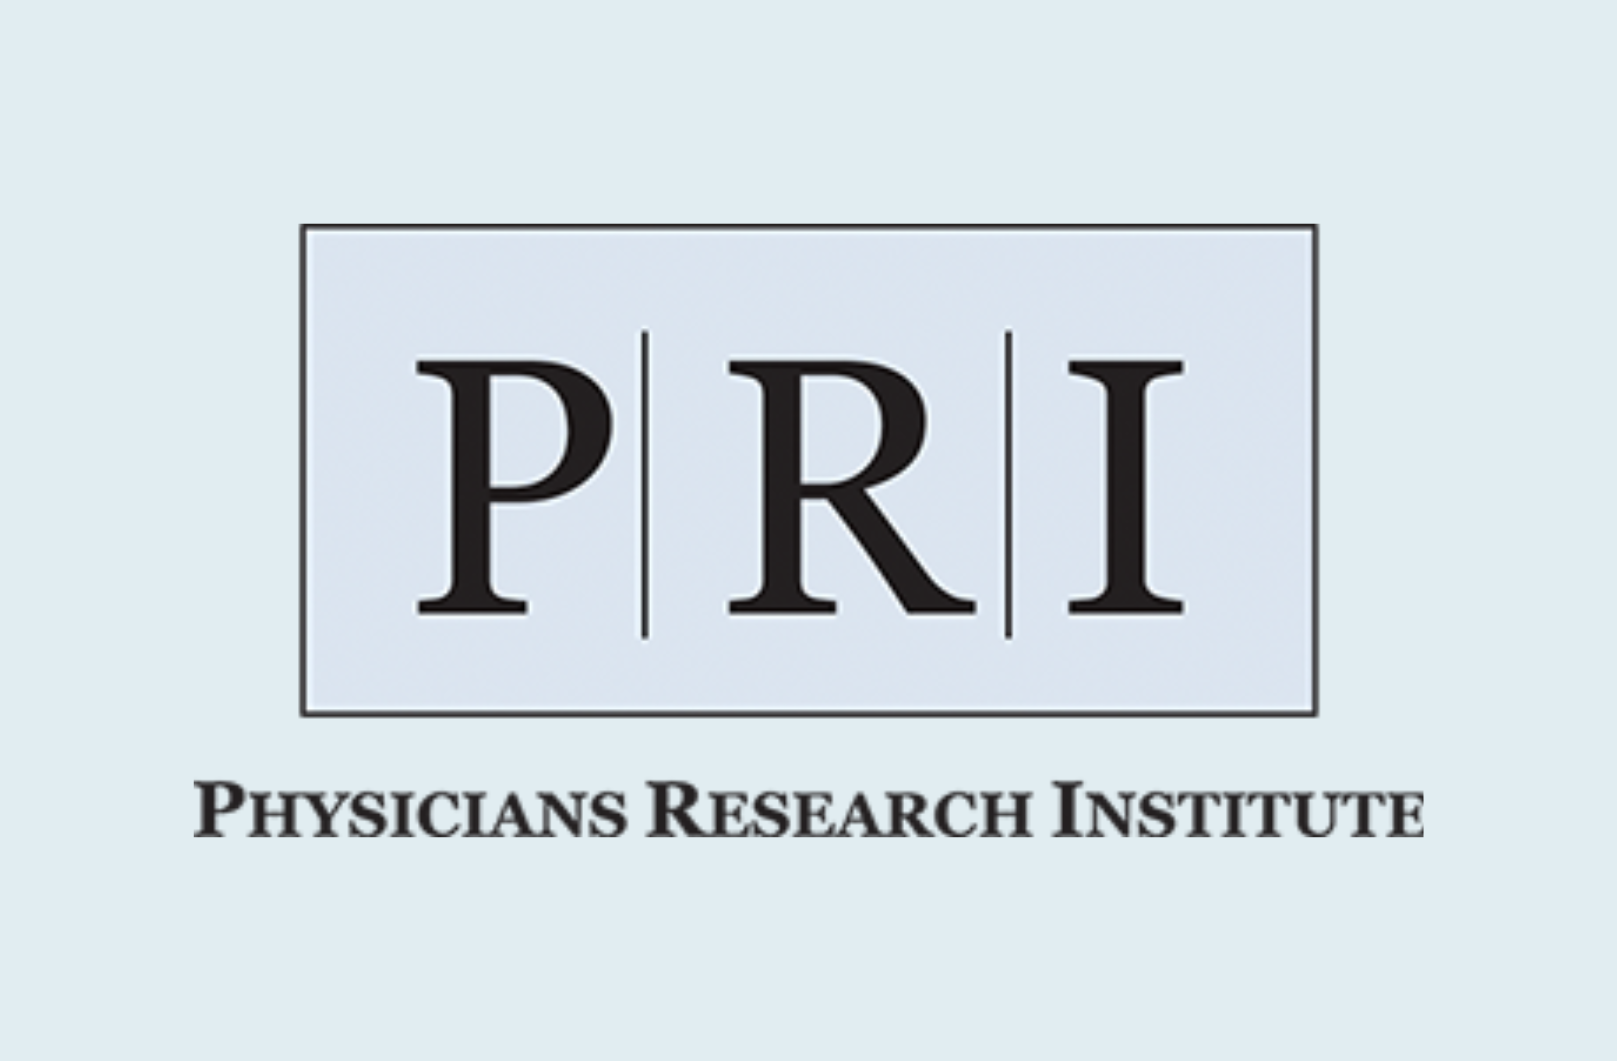 Physician research institute logo